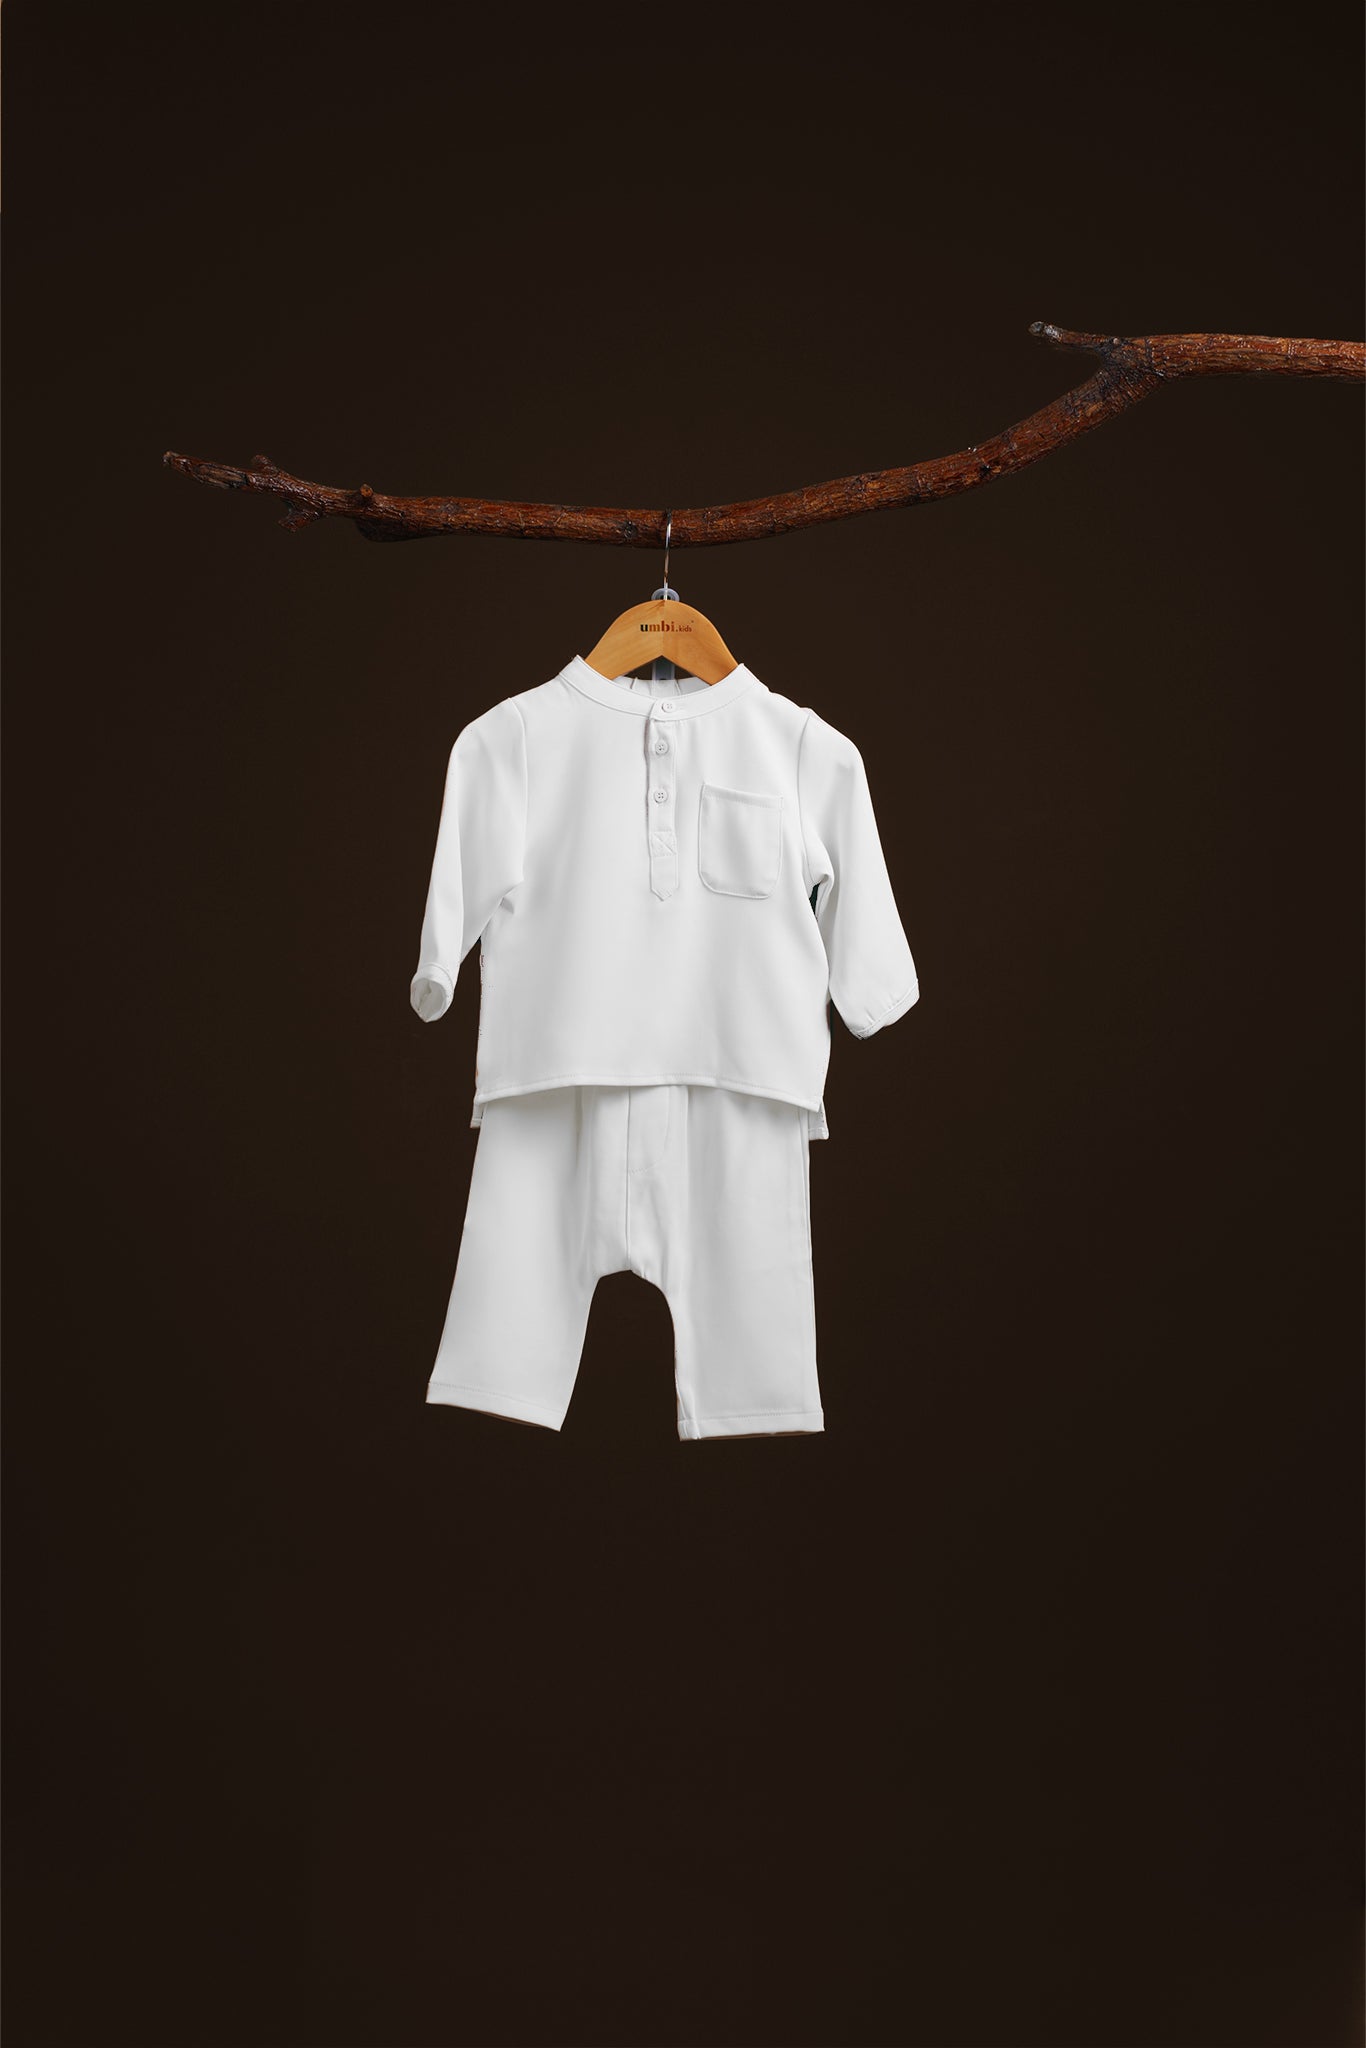 The Warisan Raya Baby Baju Melayu Set White